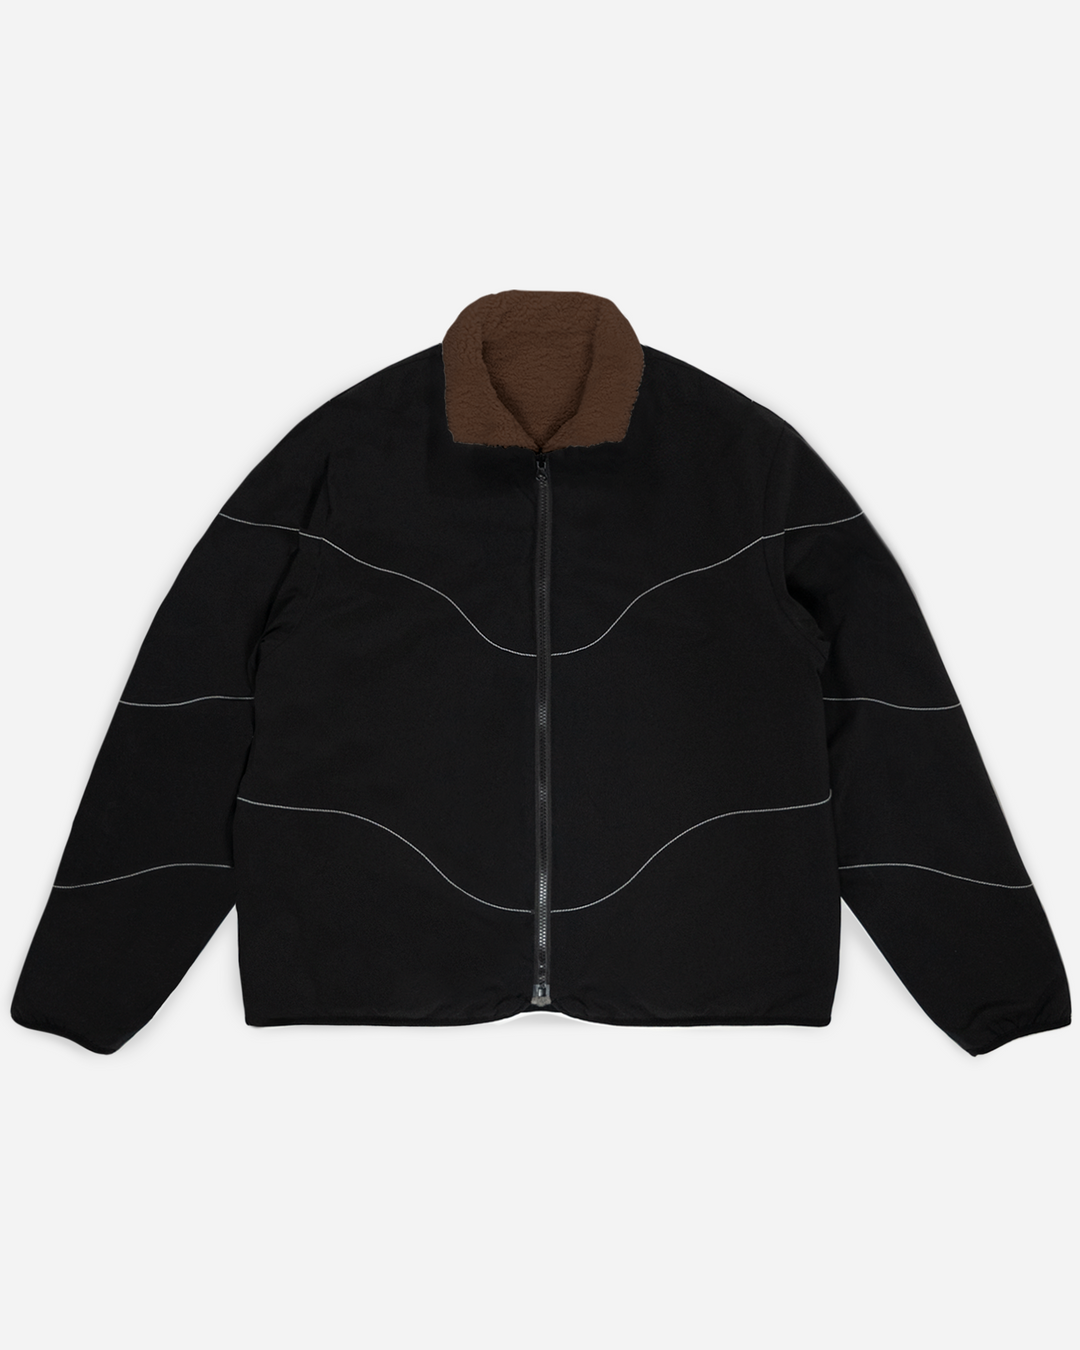 Brown Arnion Fleece Jacket